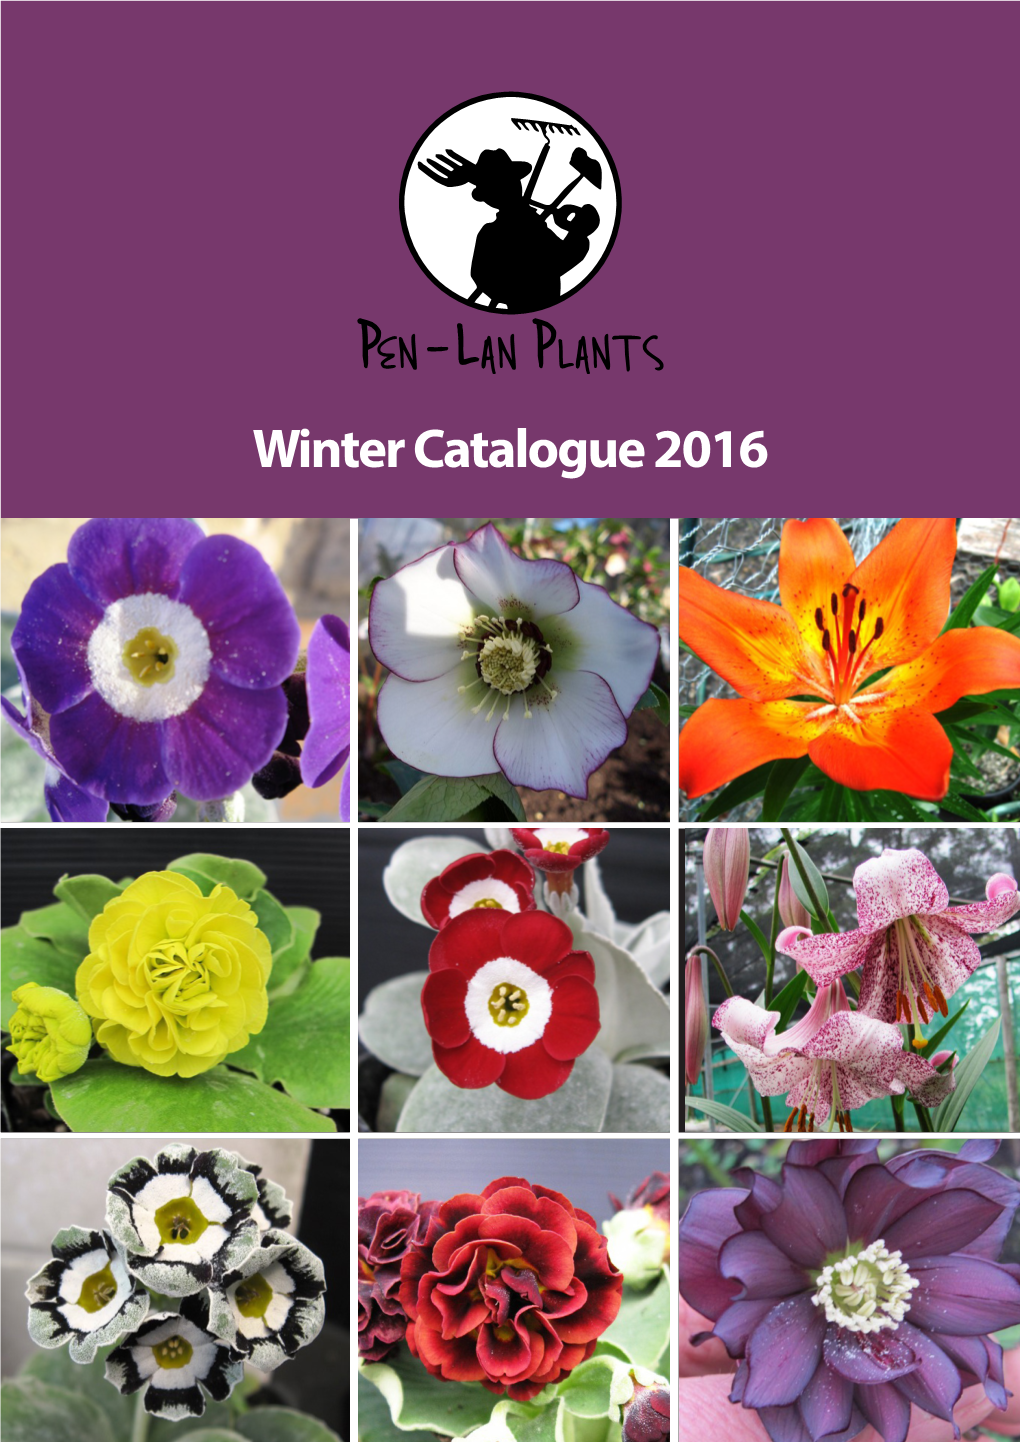 Winter Catalogue 2016